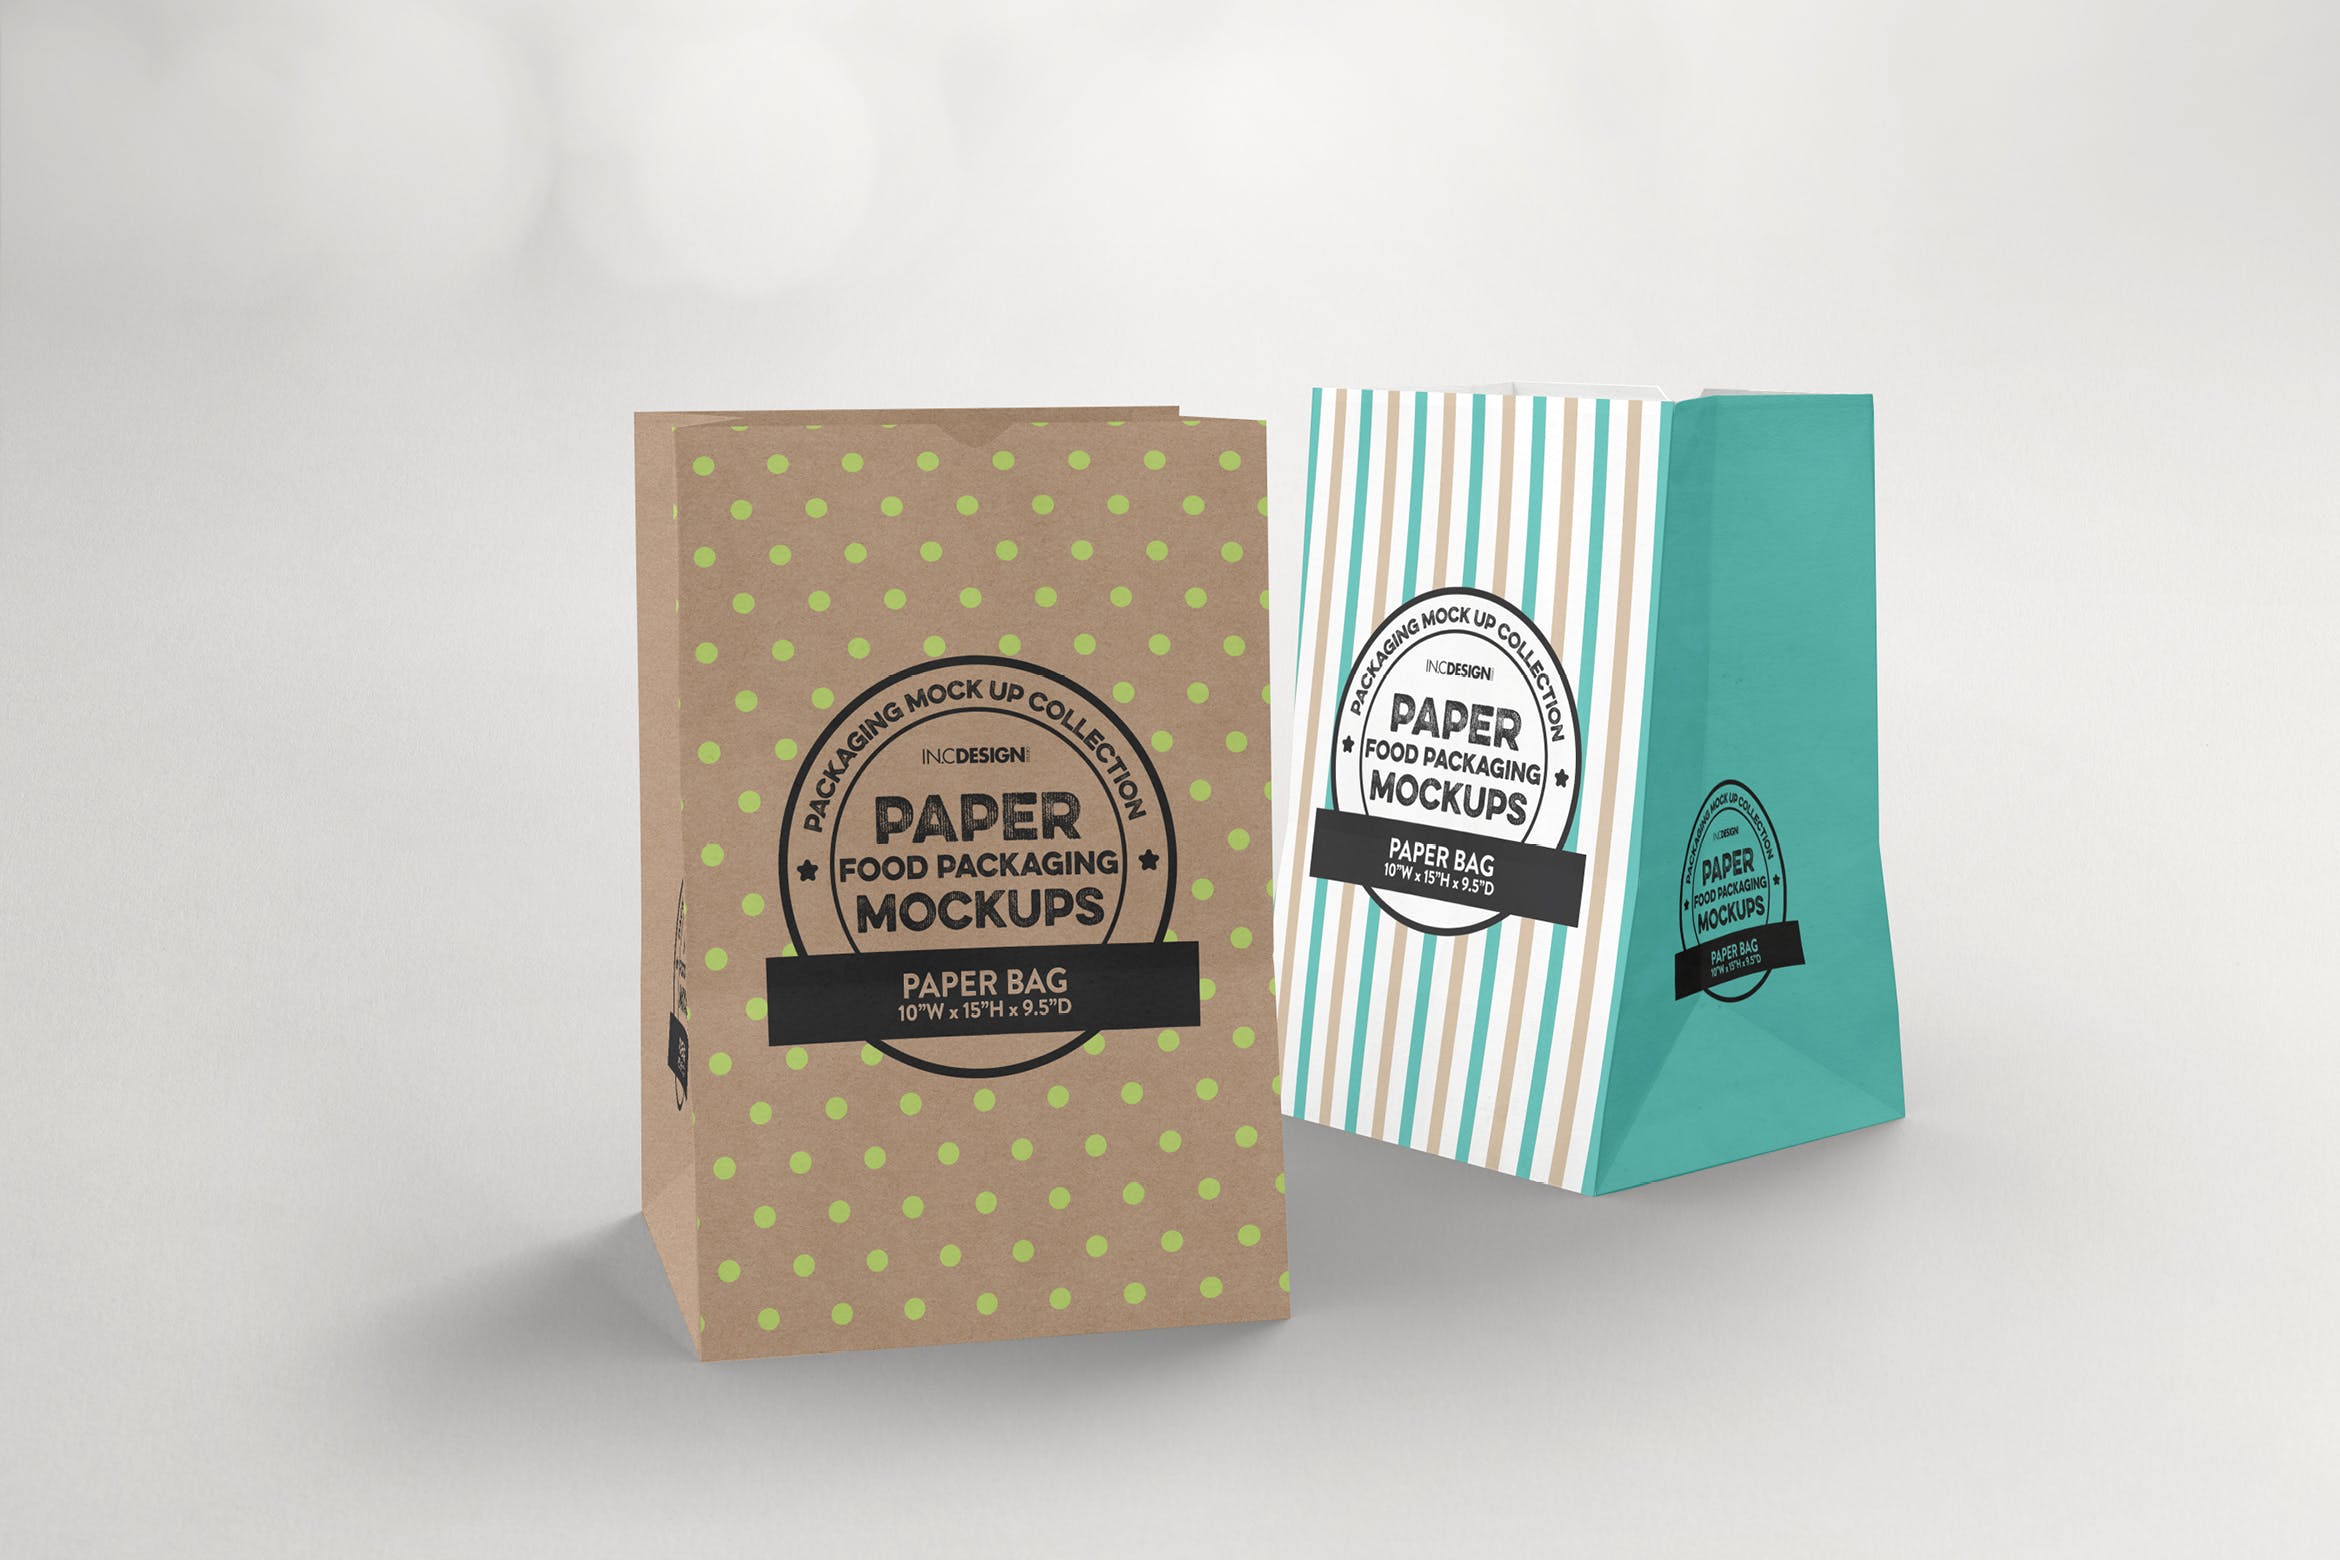 杂货纸袋包装设计效果图第一素材精选 Grocery Paper Bags Packaging Mockup插图